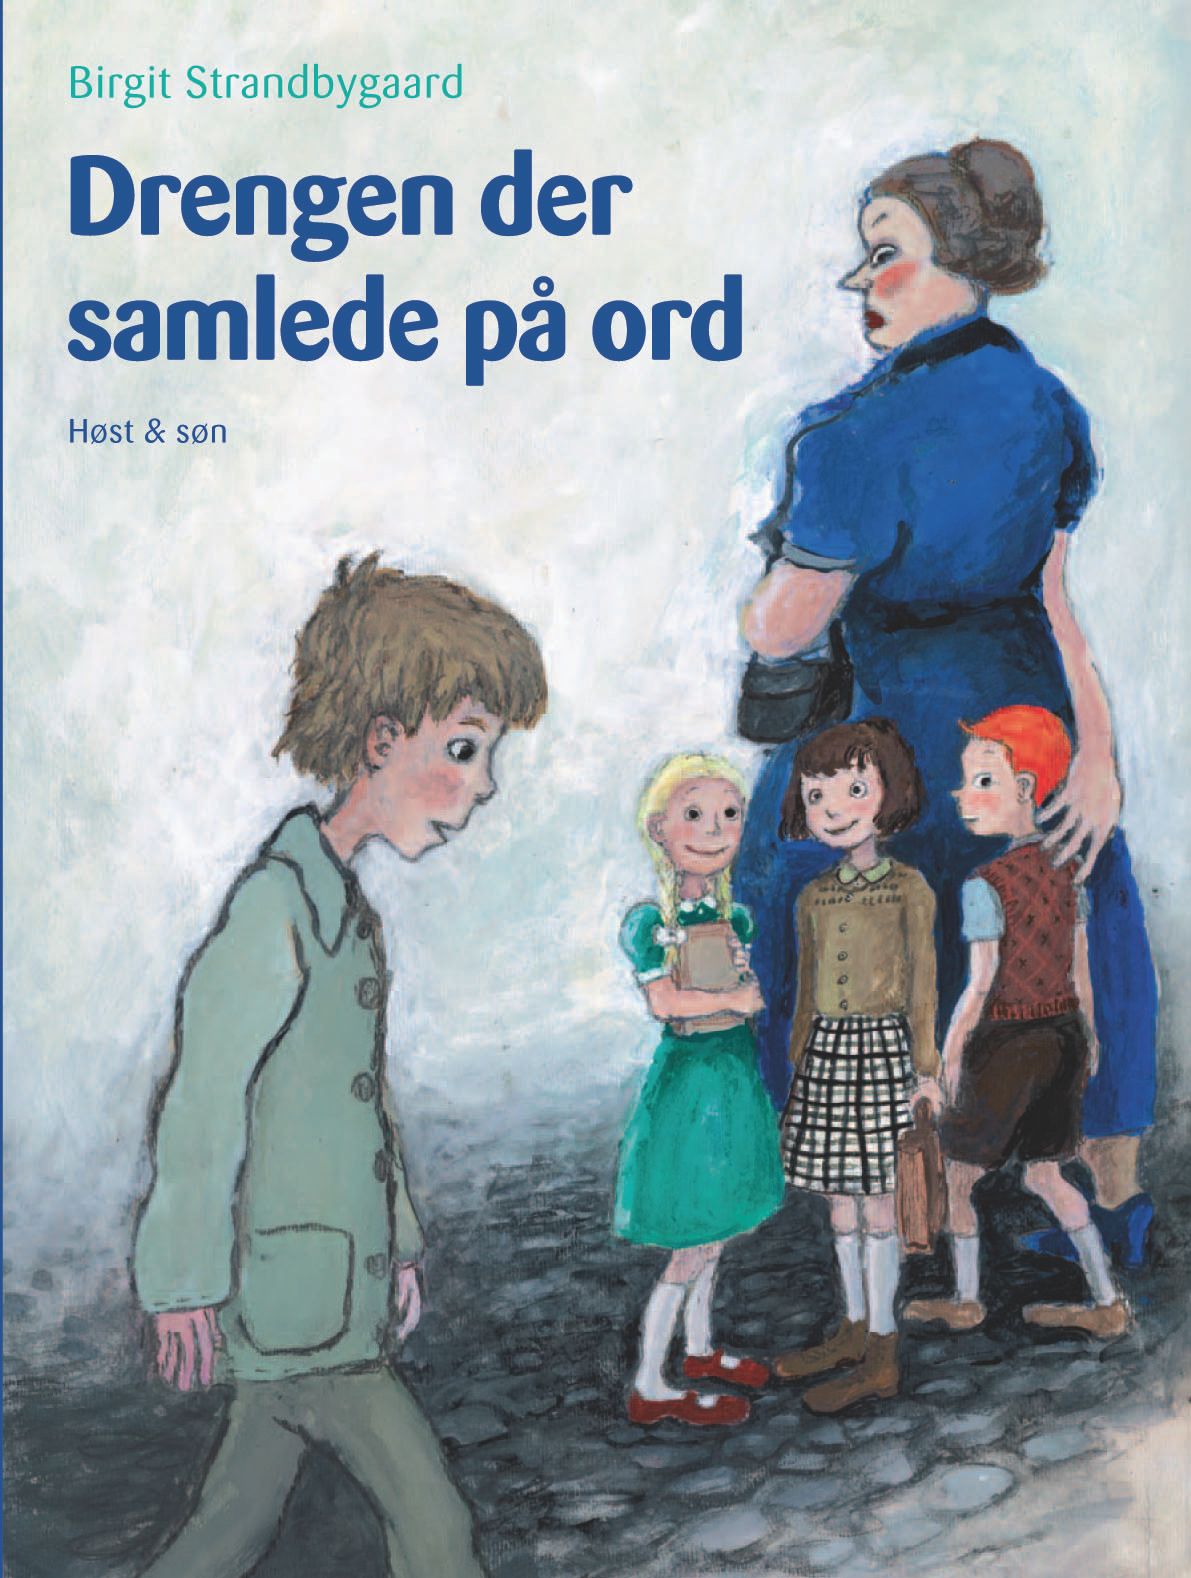 Drengen der samlede på ord, eBook by Birgit Strandbygaard